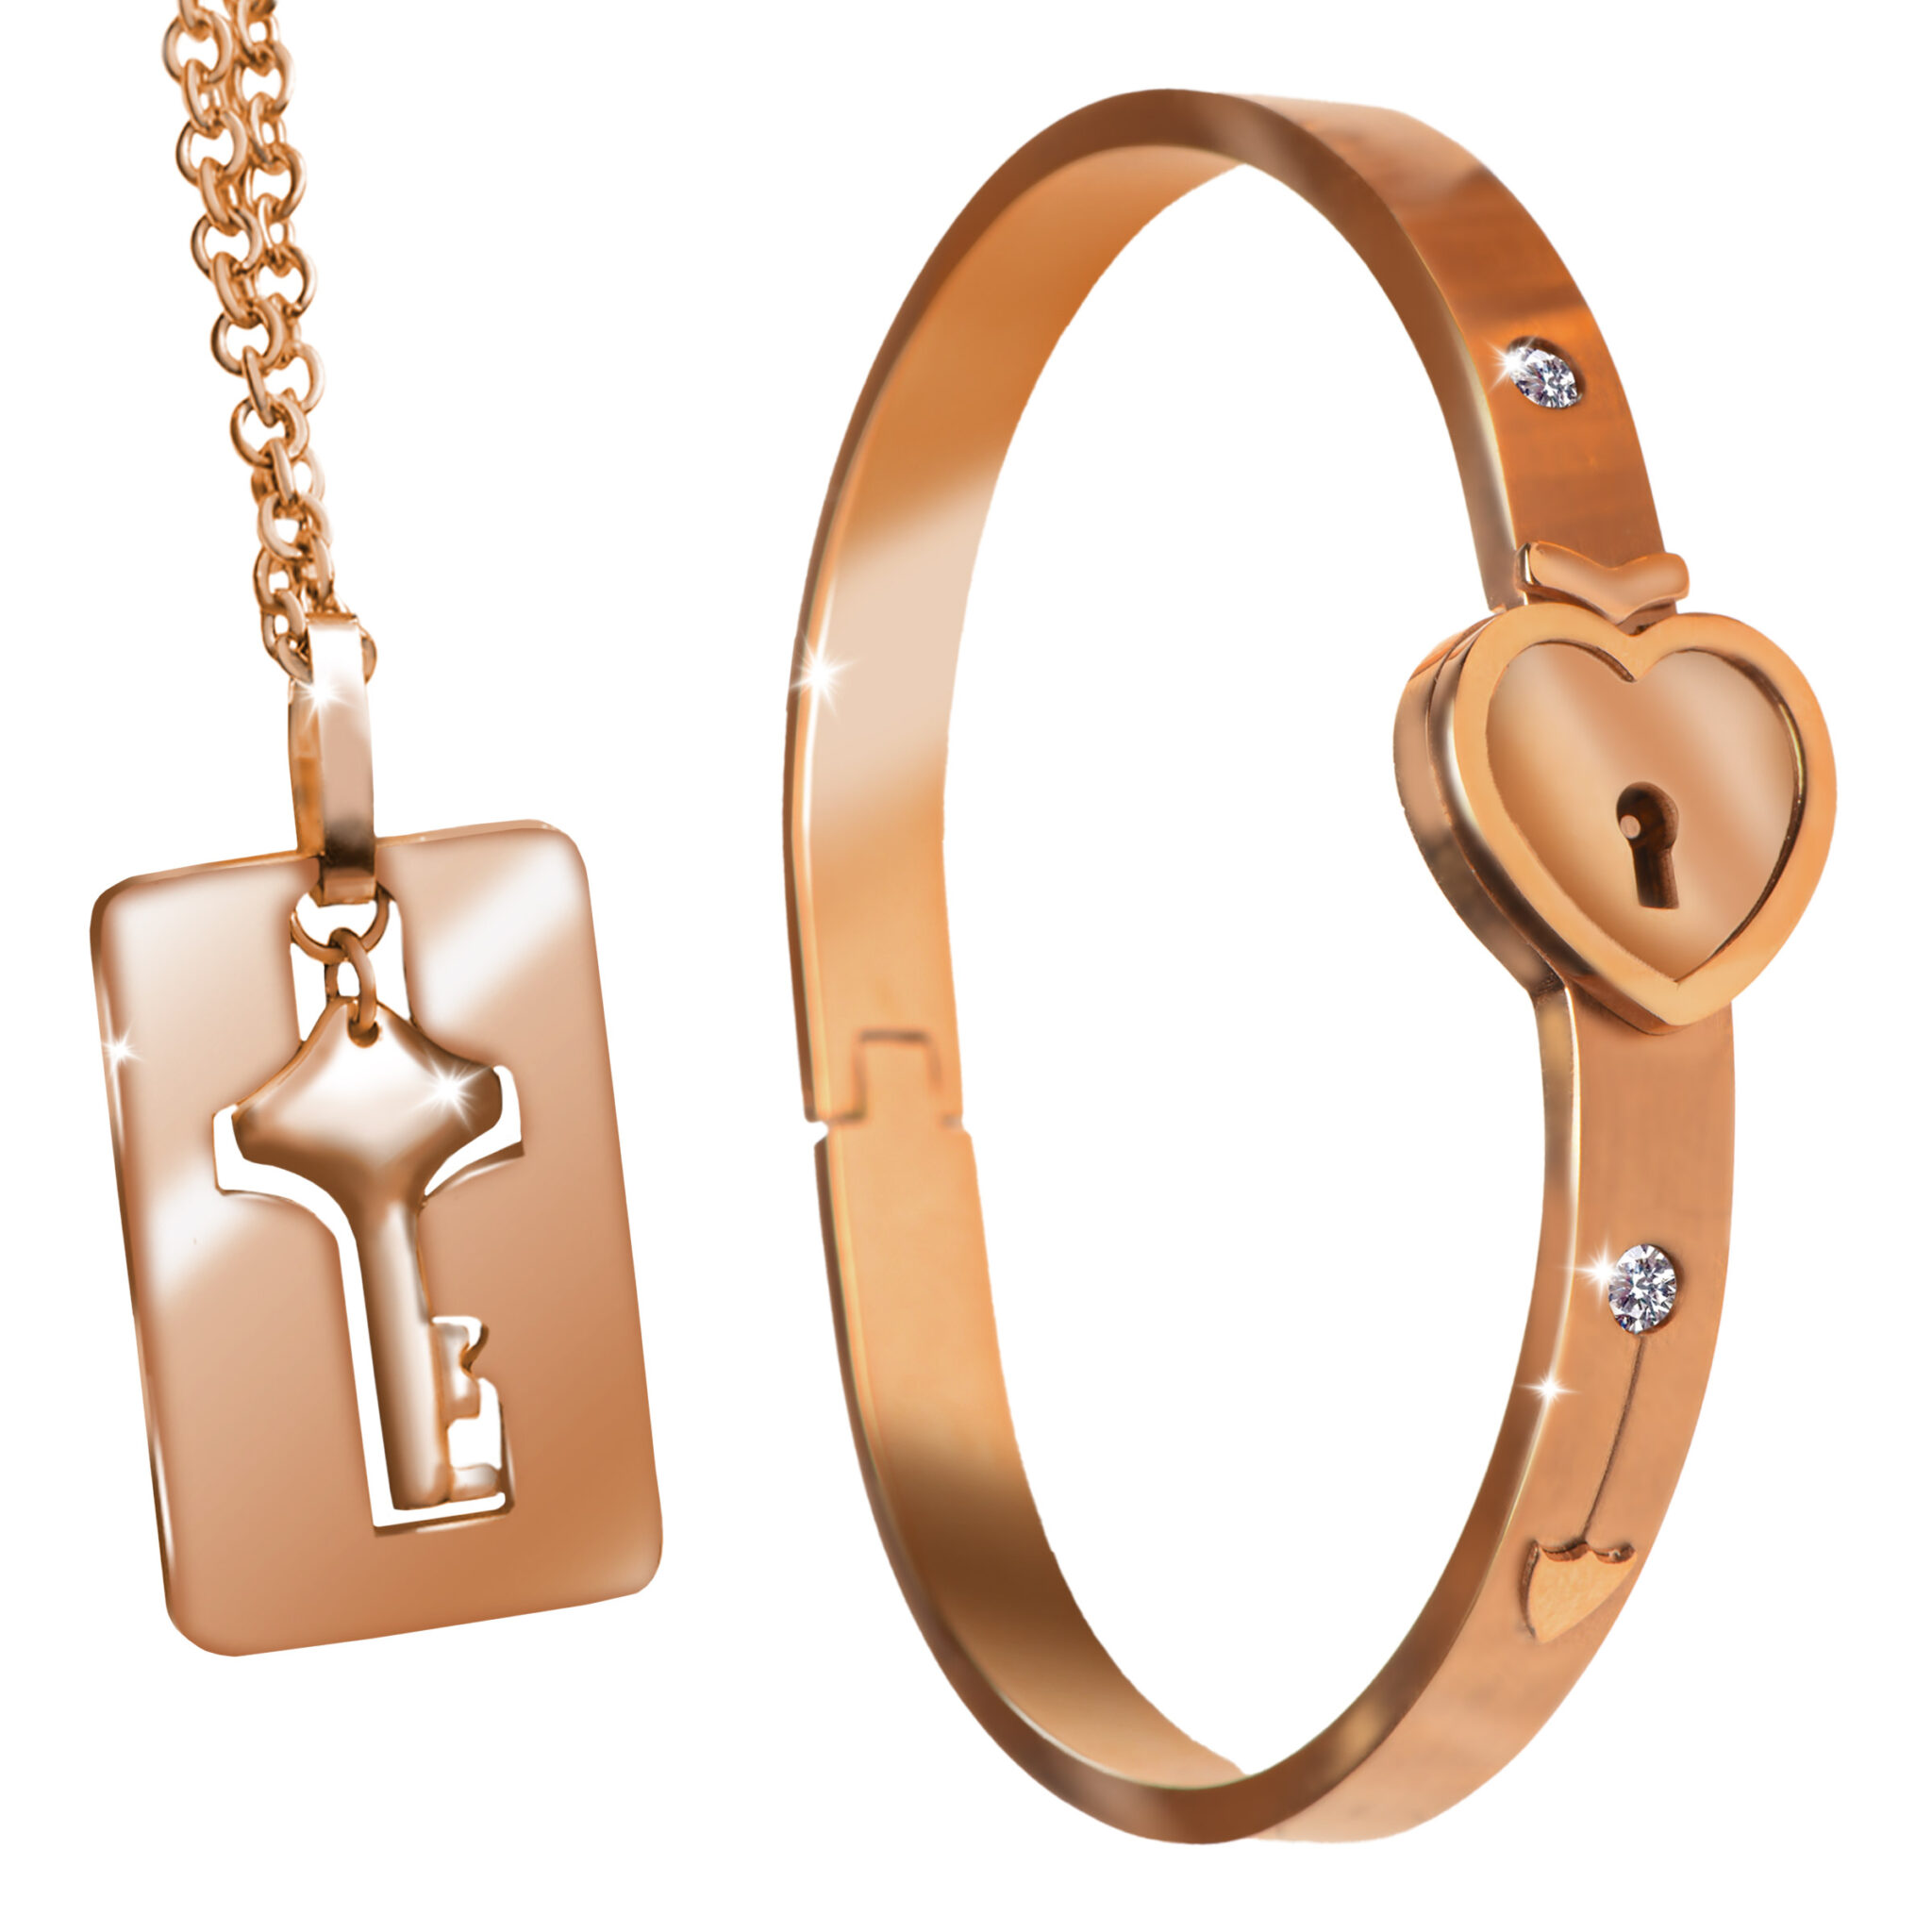 Cuffed Locking Bracelet and Key Necklace - Rose Gold-9